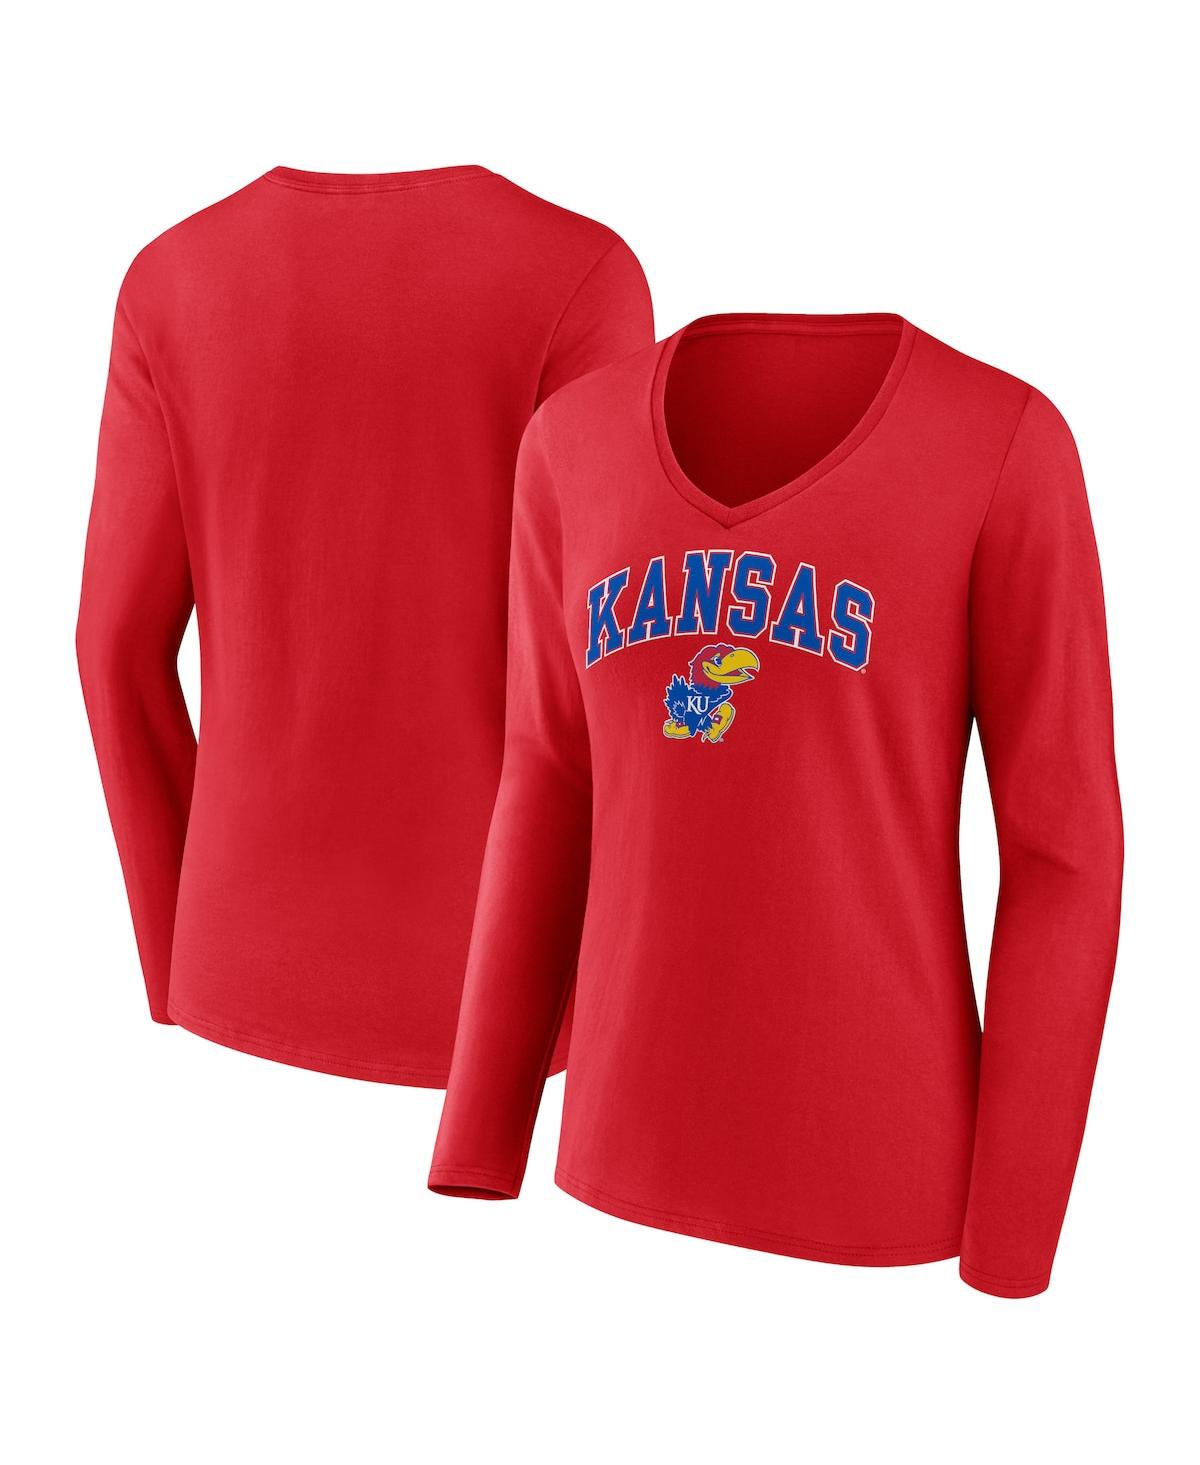 Fanatics Women's  Red Kansas Jayhawks Evergreen Campus Long Sleeve V-neck T-shirt